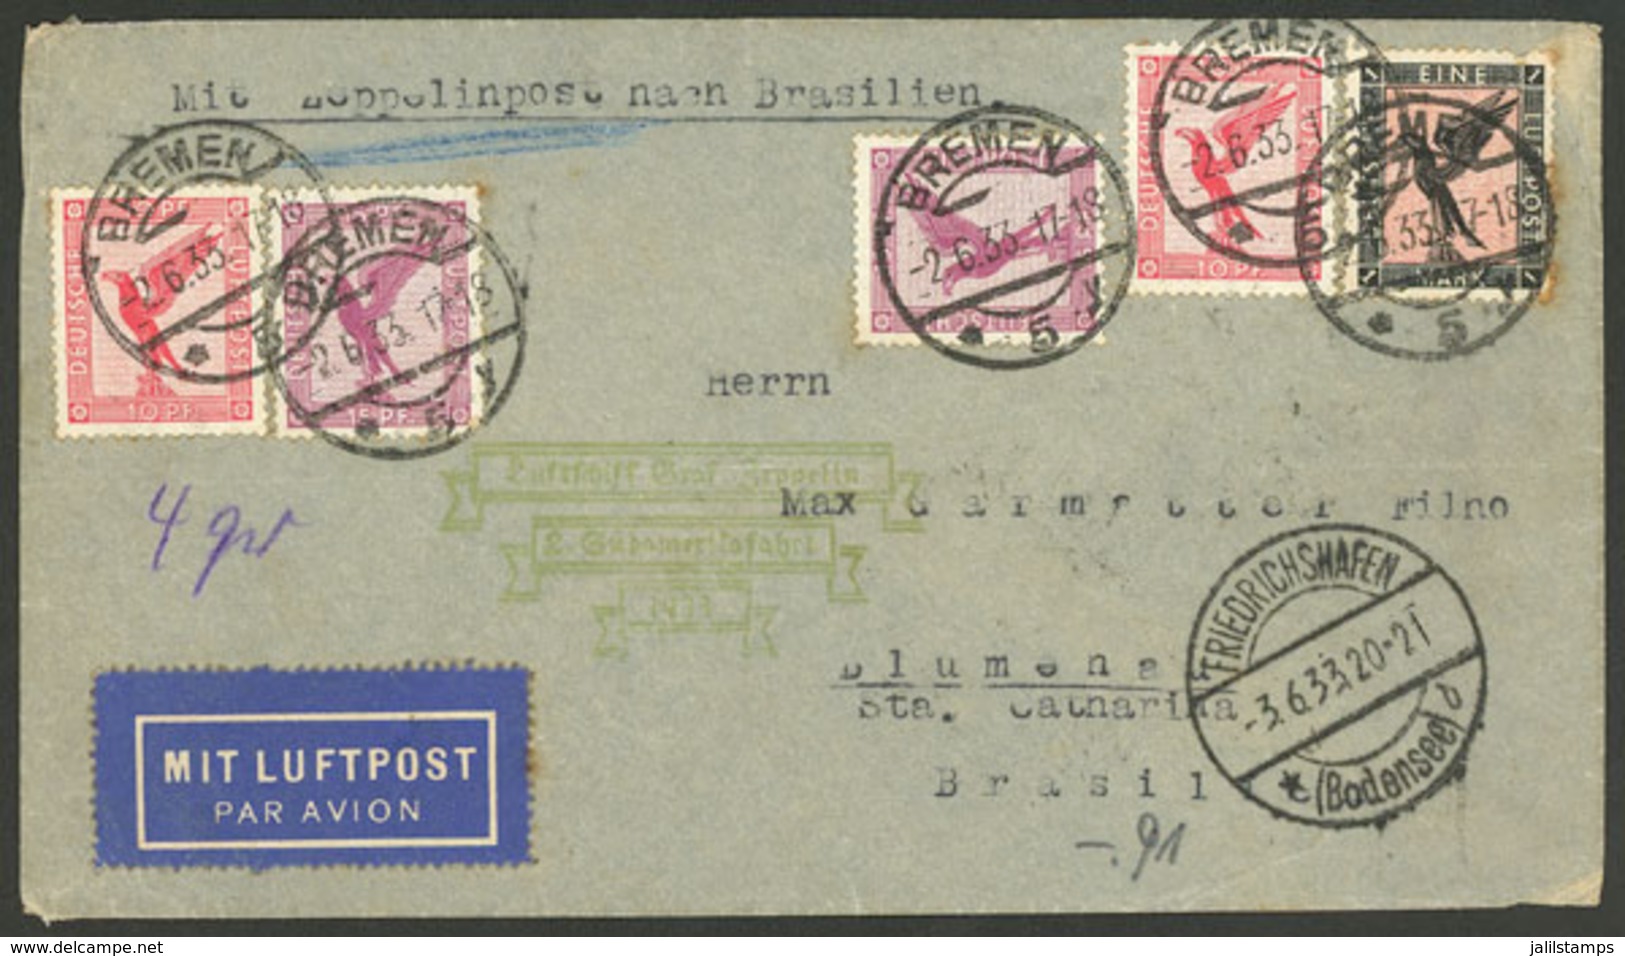 GERMANY: 2/JUN/1933 Bremen - Blumenau(Brazil): Airmail Cover Flown By Zeppelin, With Transit Mark Of Friedrichshafen For - Lettres & Documents